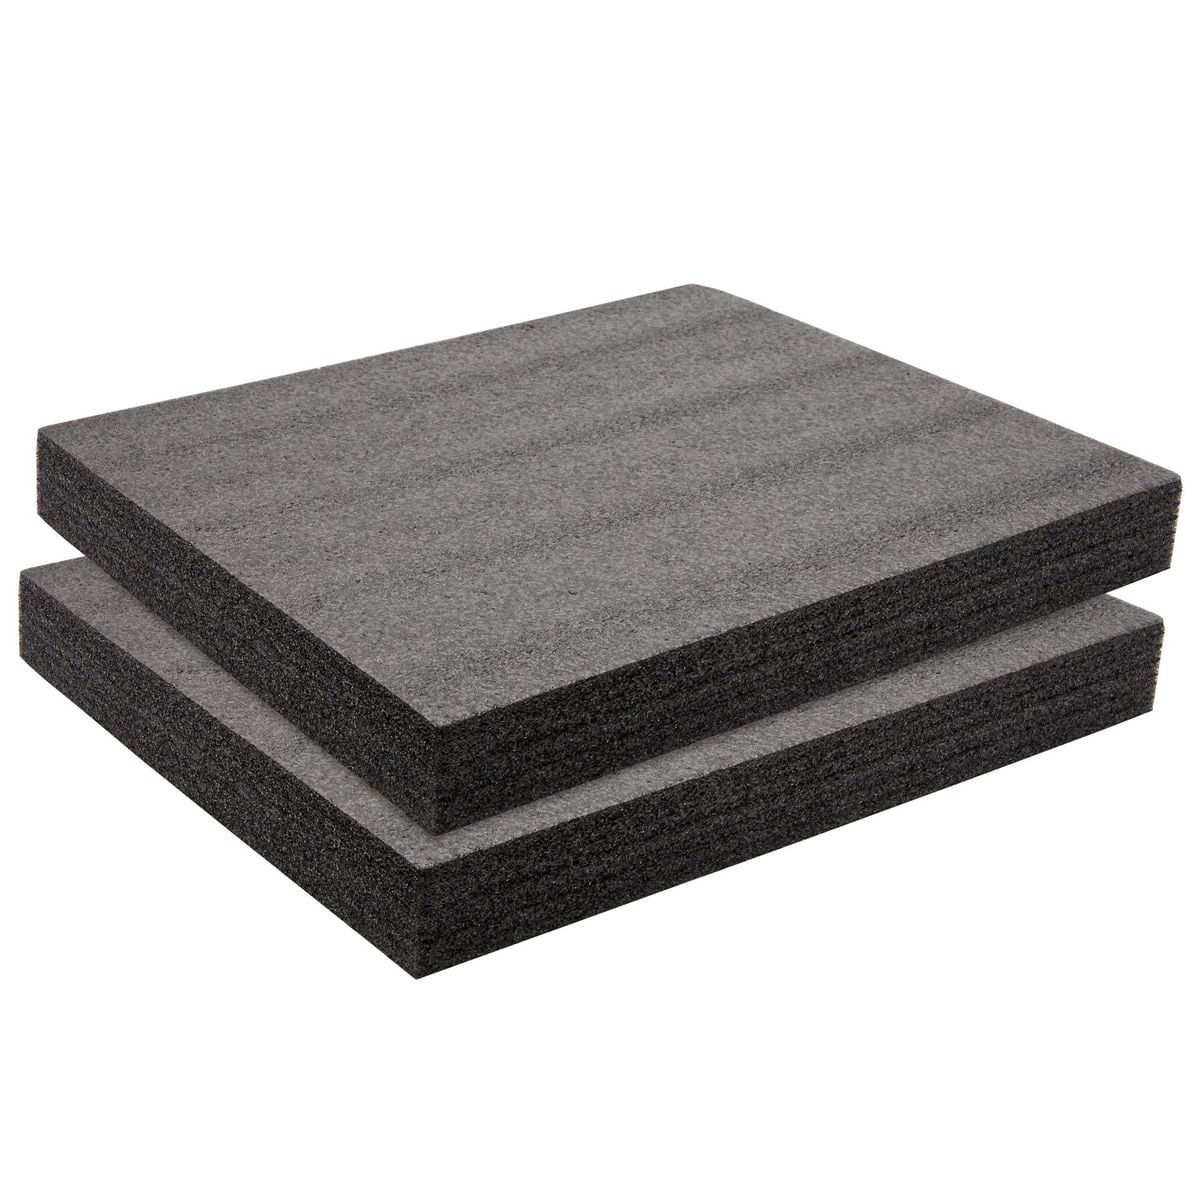 5GCY9, Foam Sheet 300135 Poly Charcoal 3/4 x 24 x 24